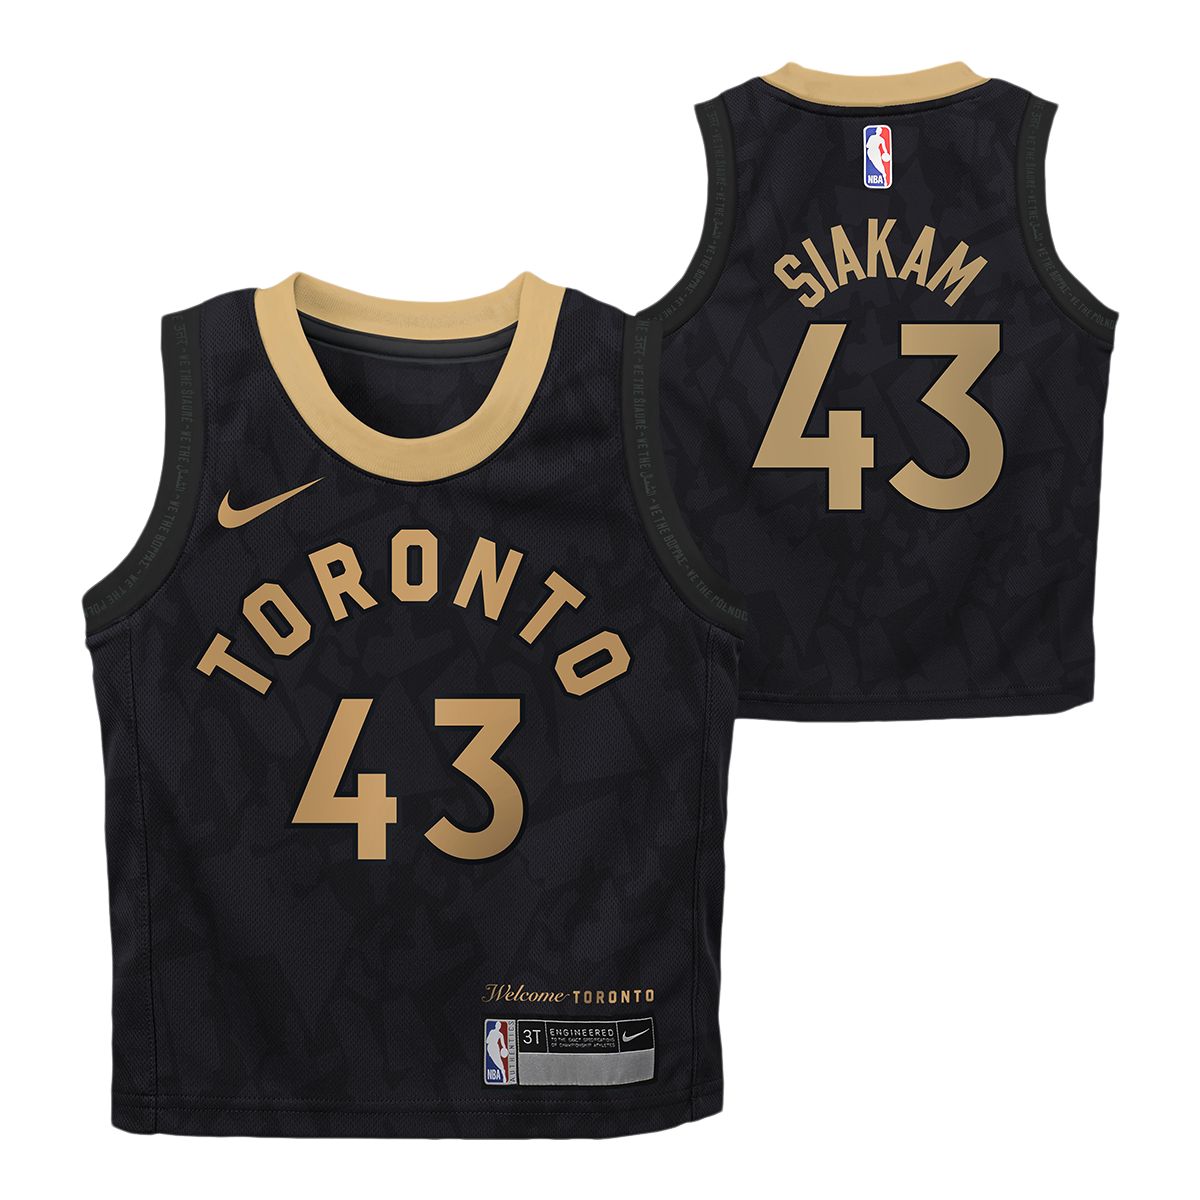 White Nike NBA Toronto Raptors Siakam #43 Swingman Jersey